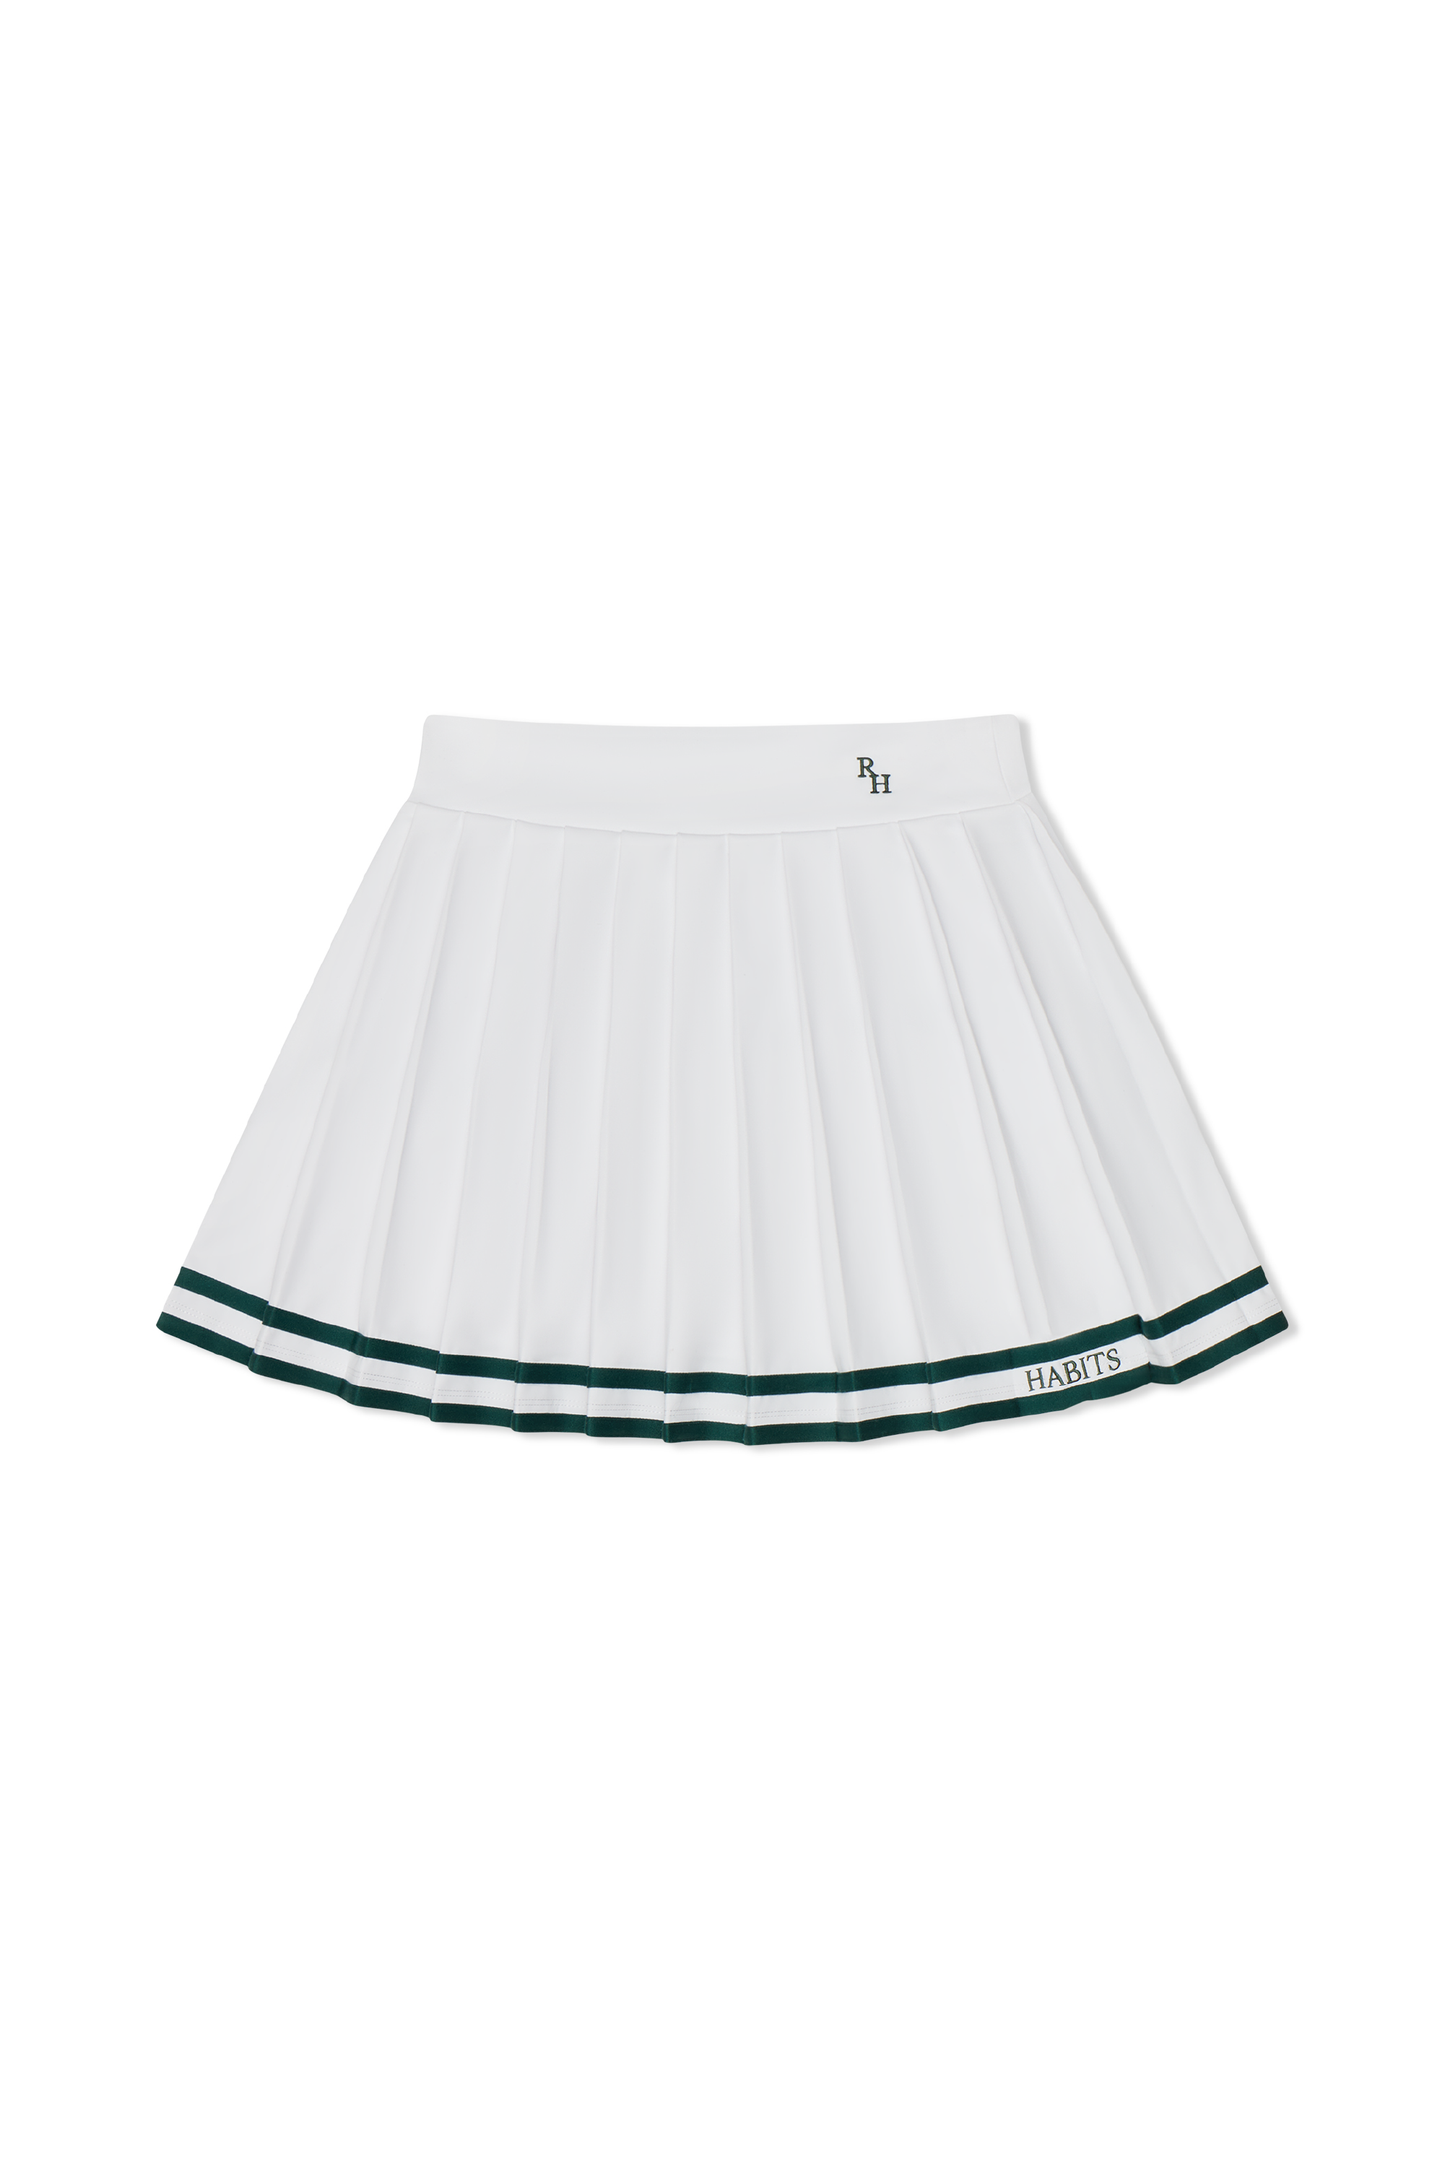 Natasha Tennis Skirt with Green Piping